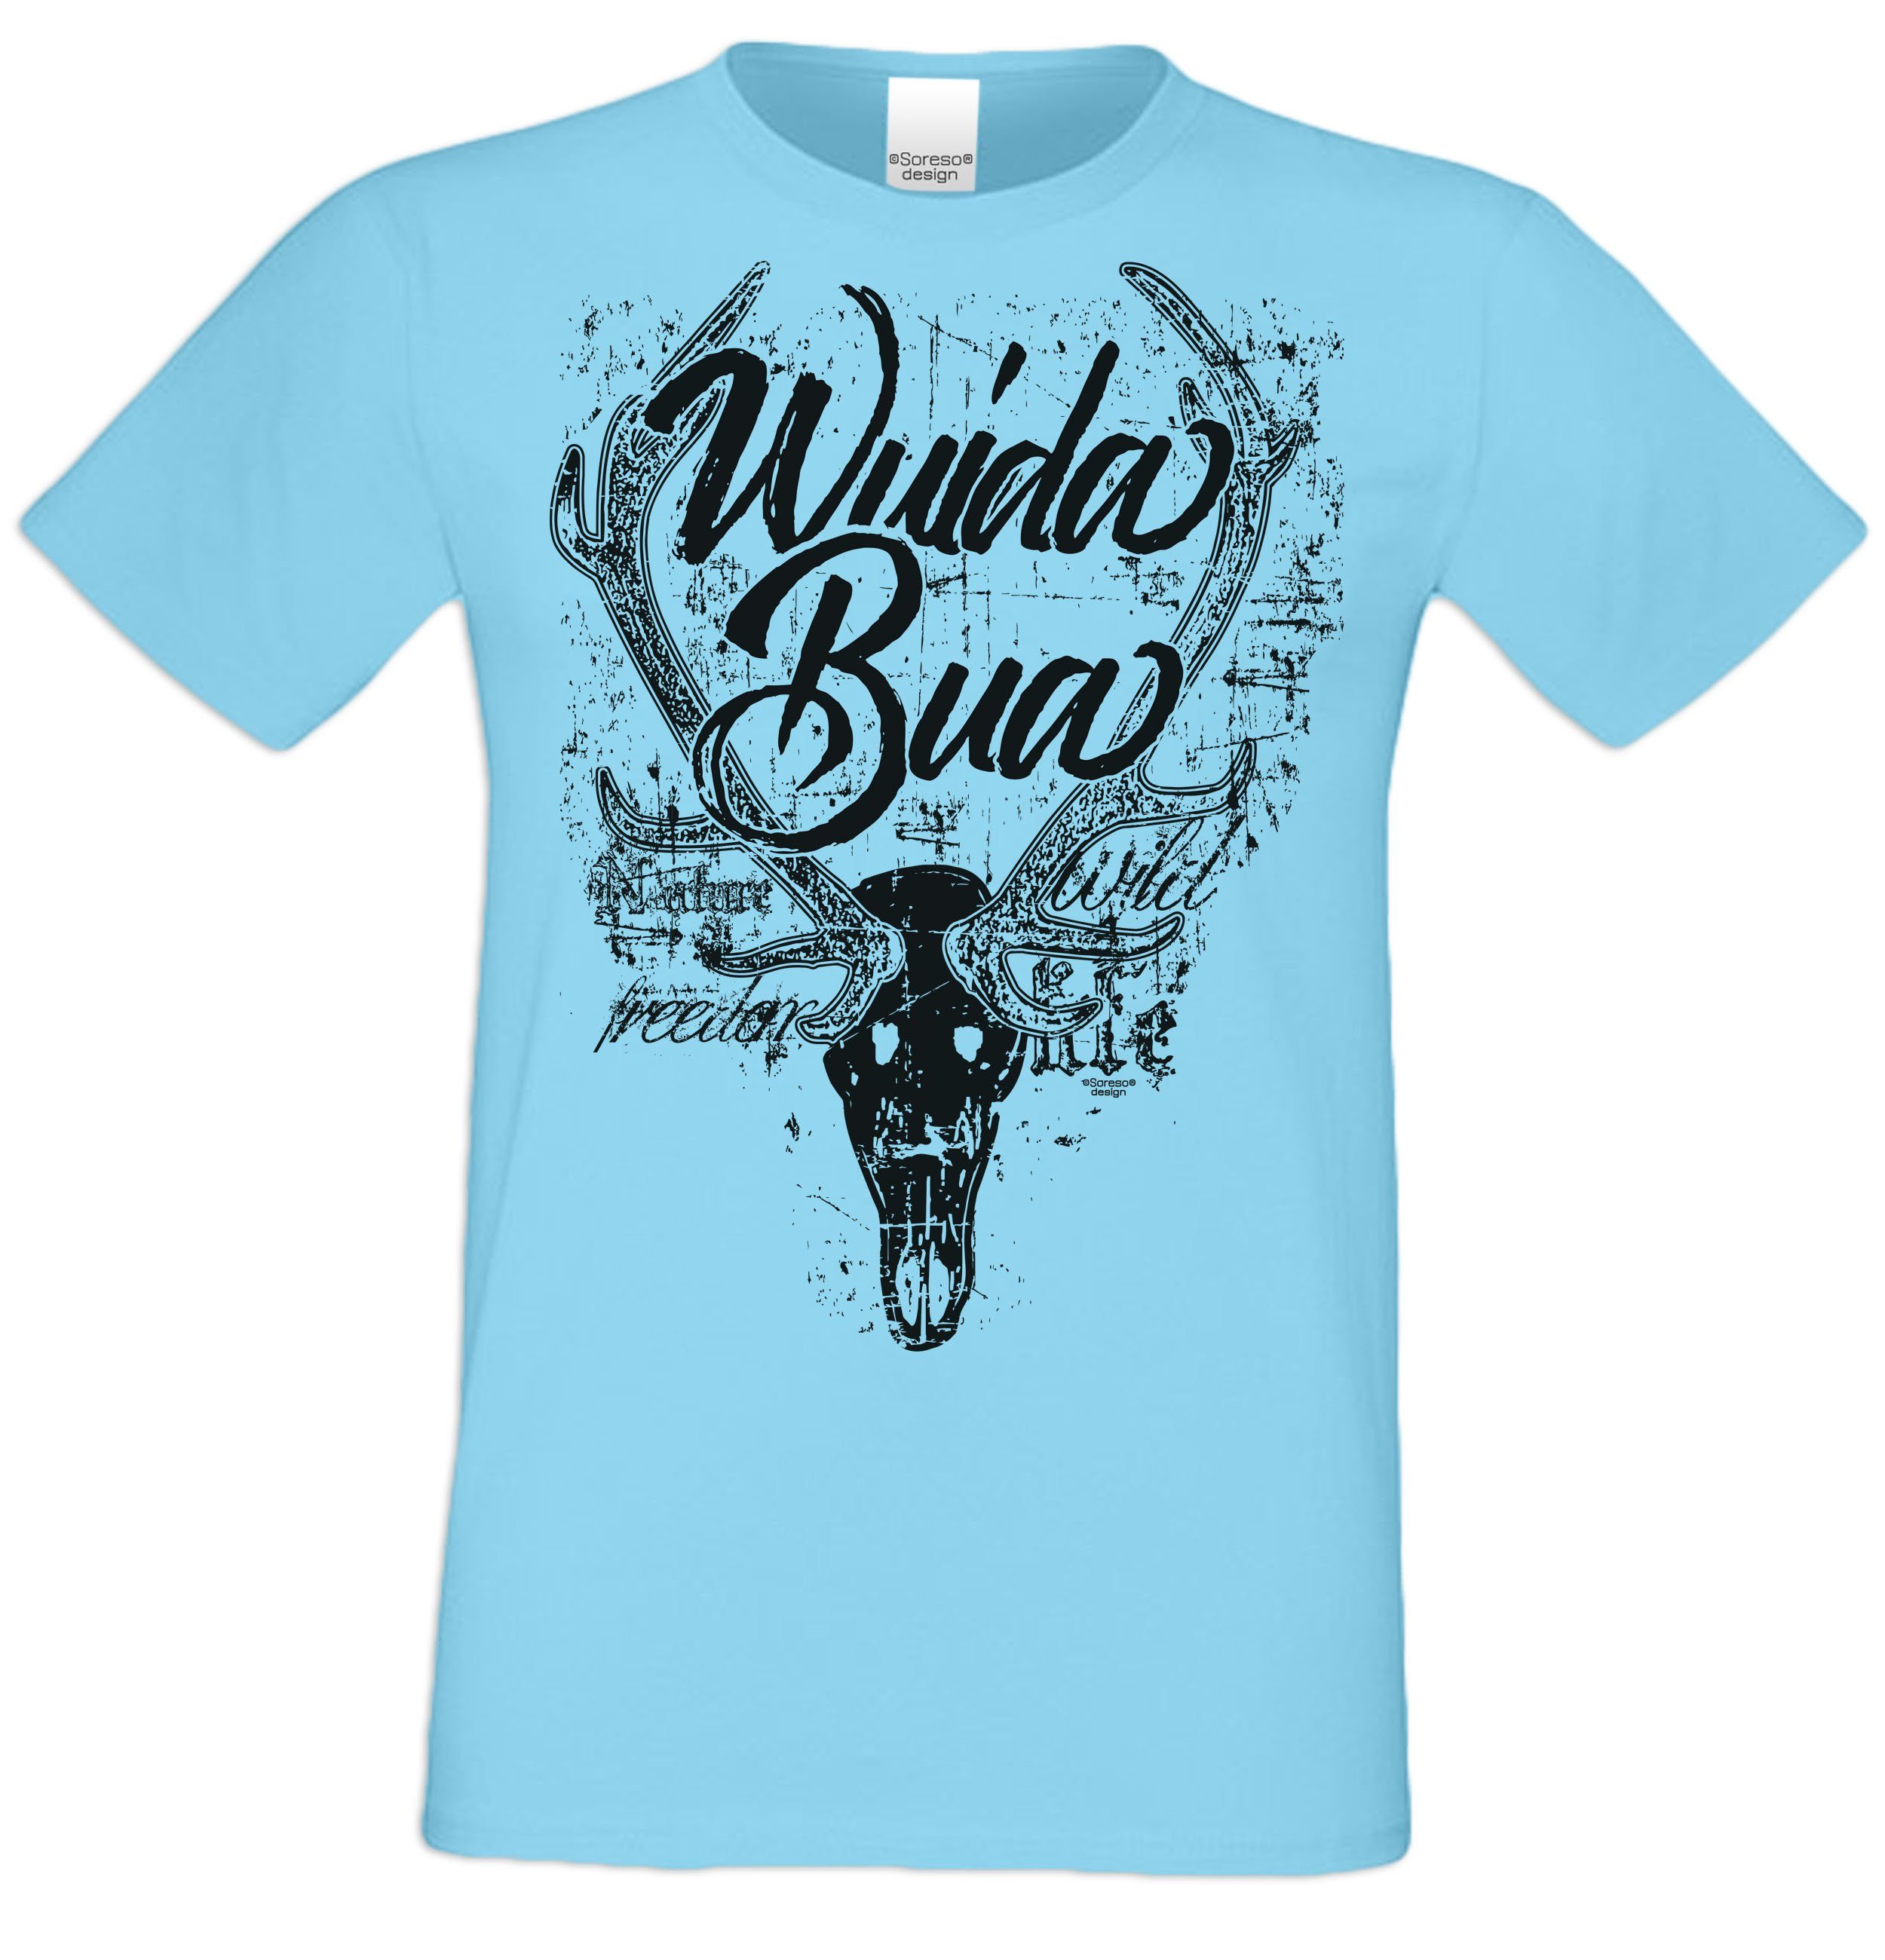 Soreso® T-Shirt Herren T-Shirt hellblau T-Shirt) Trachtenshirt Trachten Männer Wuida Bua (Ein